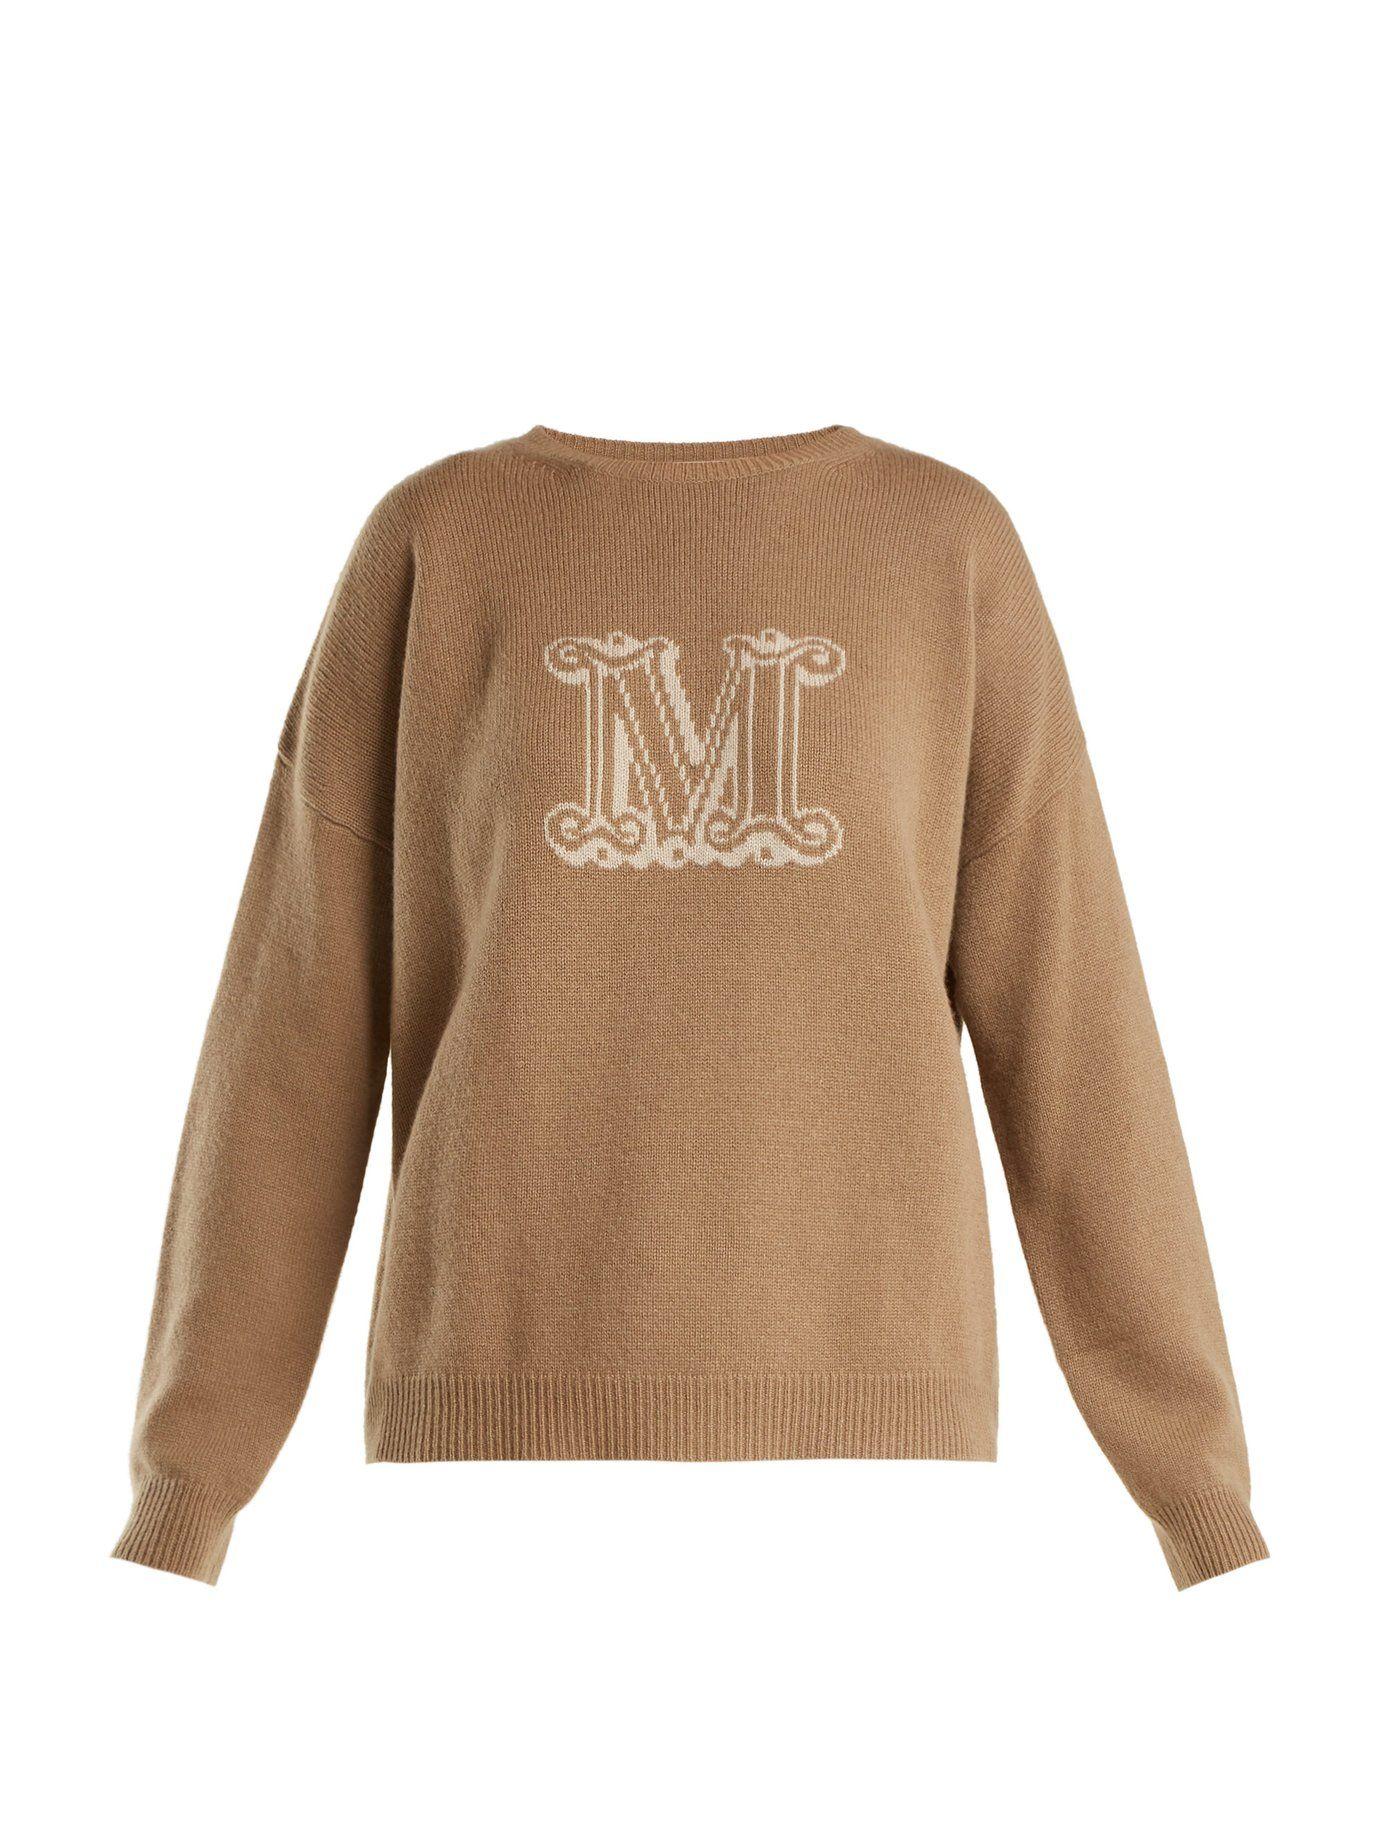 Max Mara Logo - Max Mara Logo Intarsia Cashmere Knit Sweater In Neutrals | ModeSens